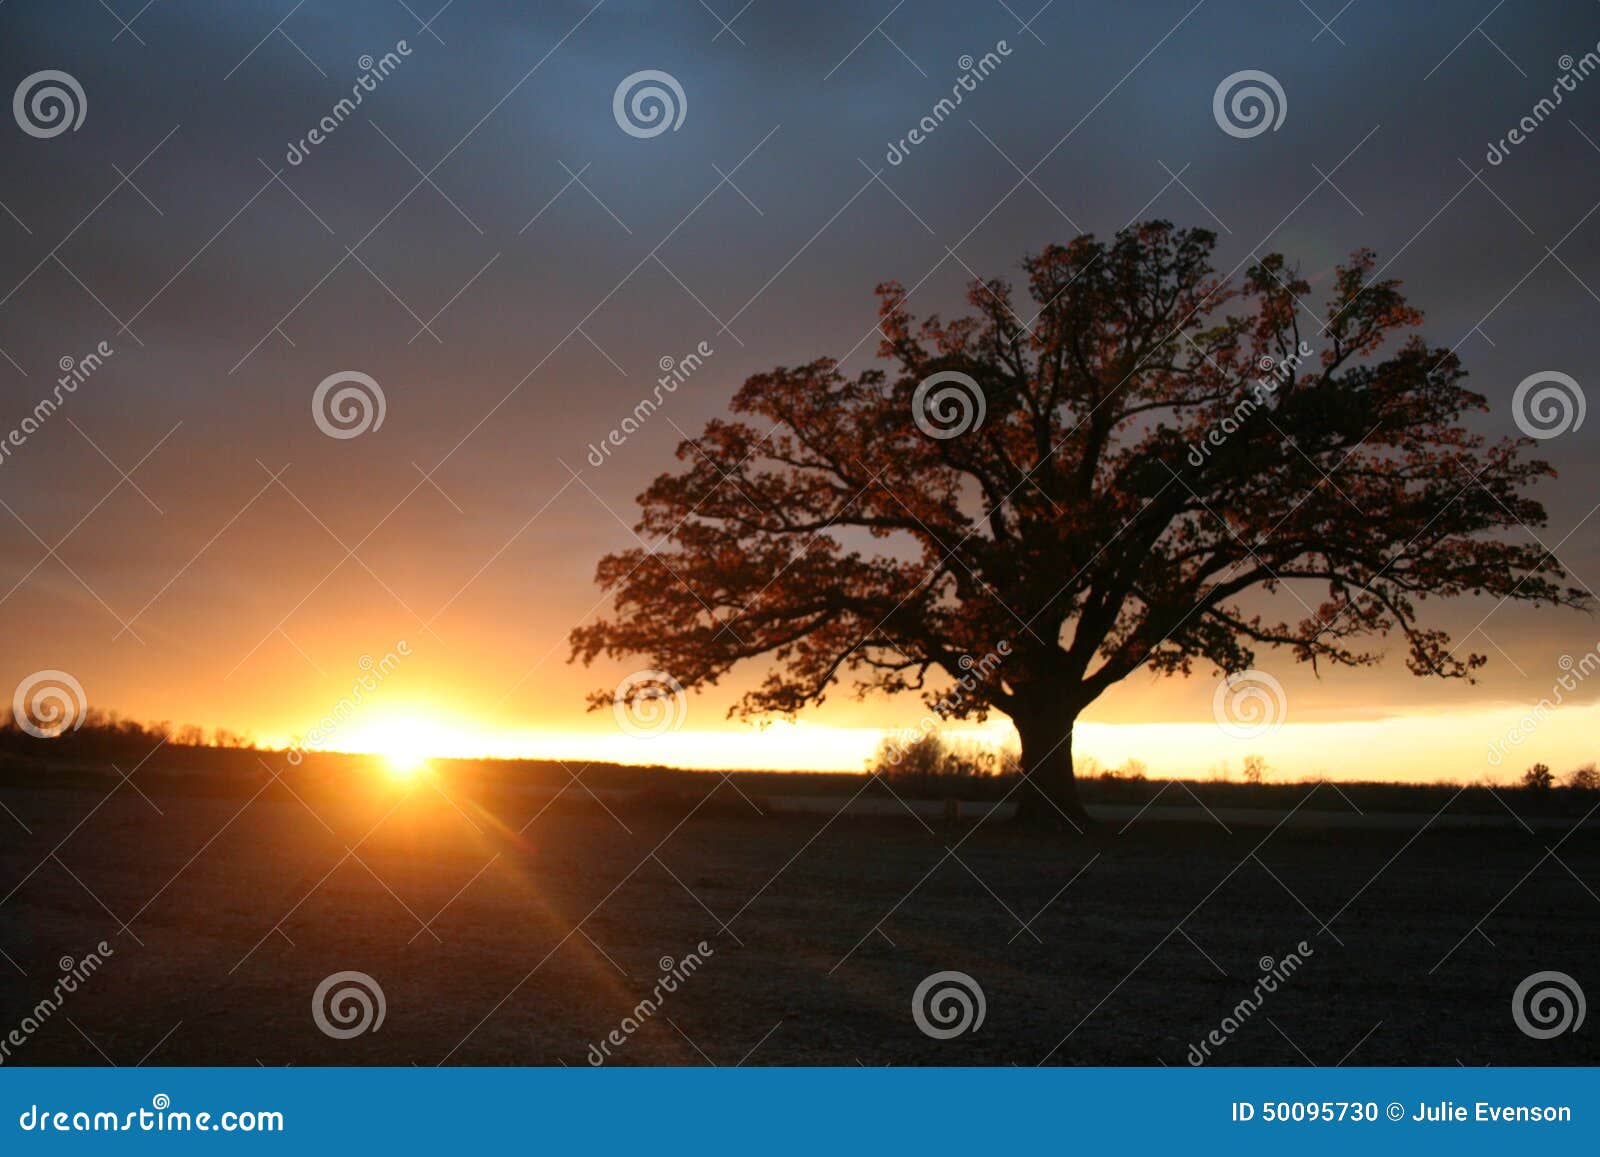 summer sunset behind the mighty bur oak